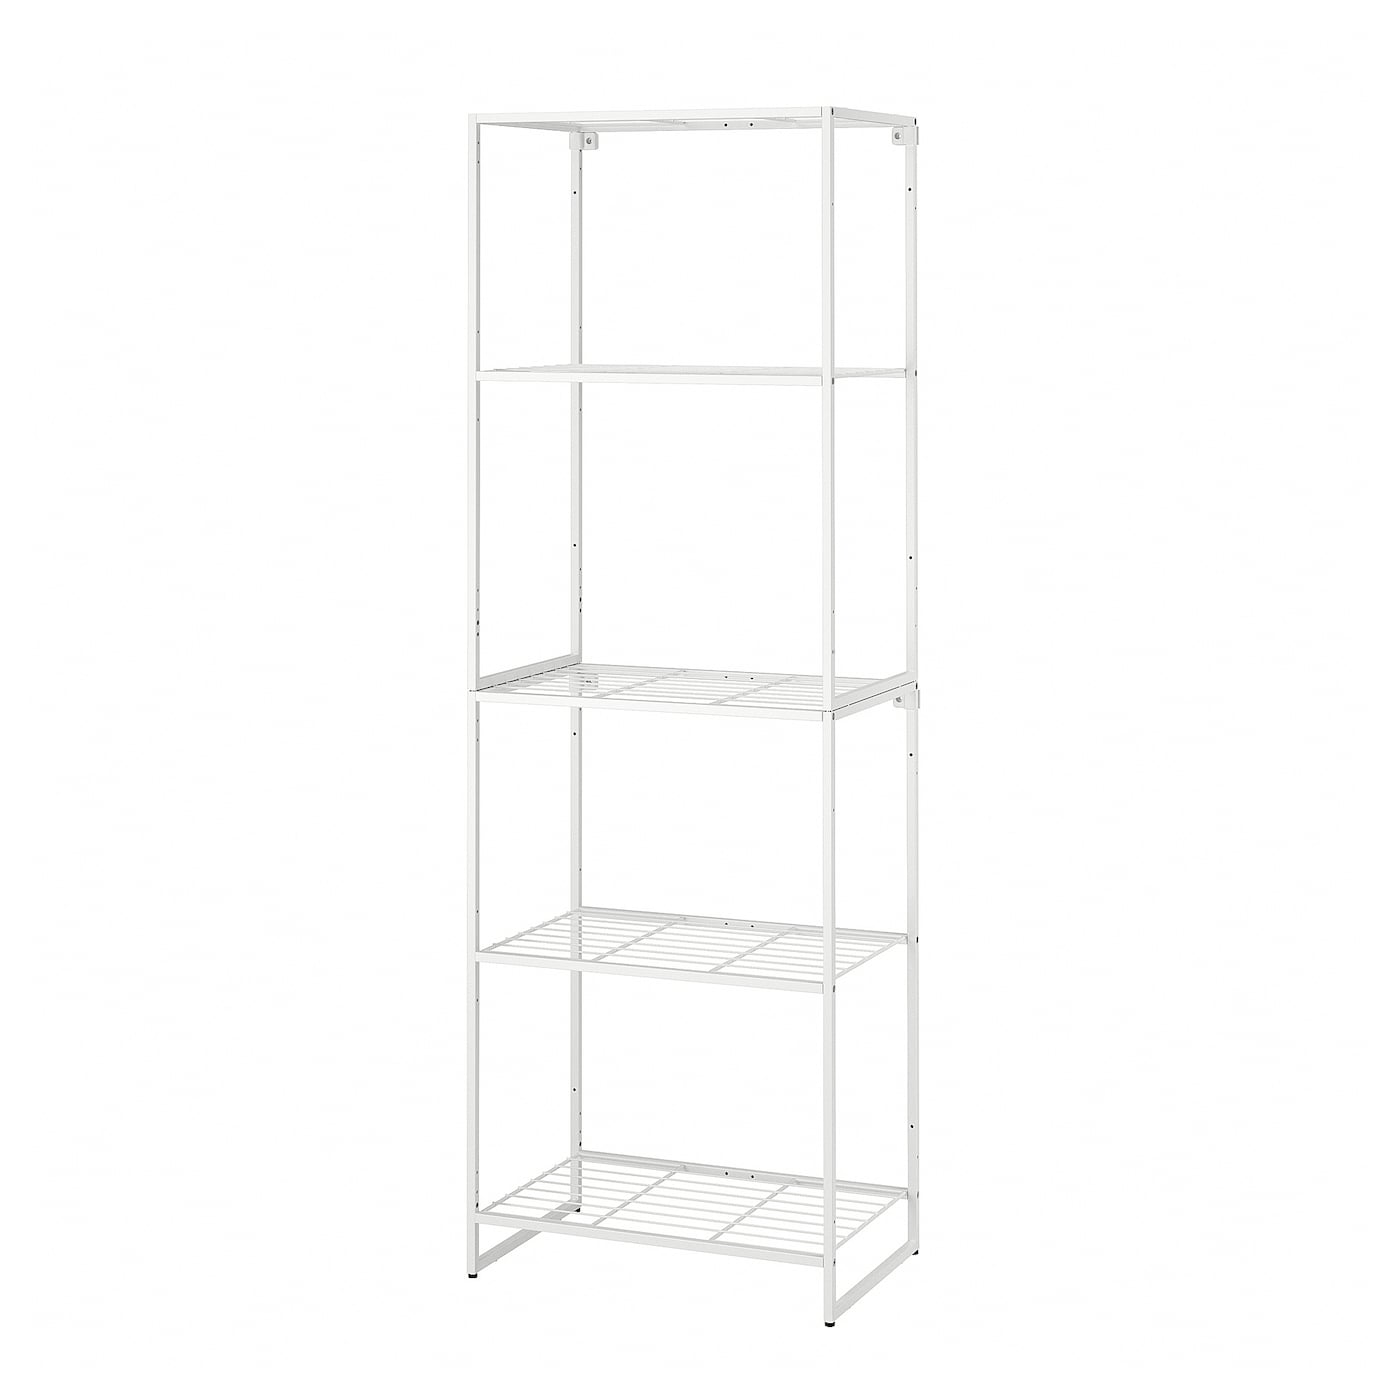 Книжный шкаф - JOSTEIN IKEA/ ЙОСТЕЙН ИКЕА,  180х61 см, белый